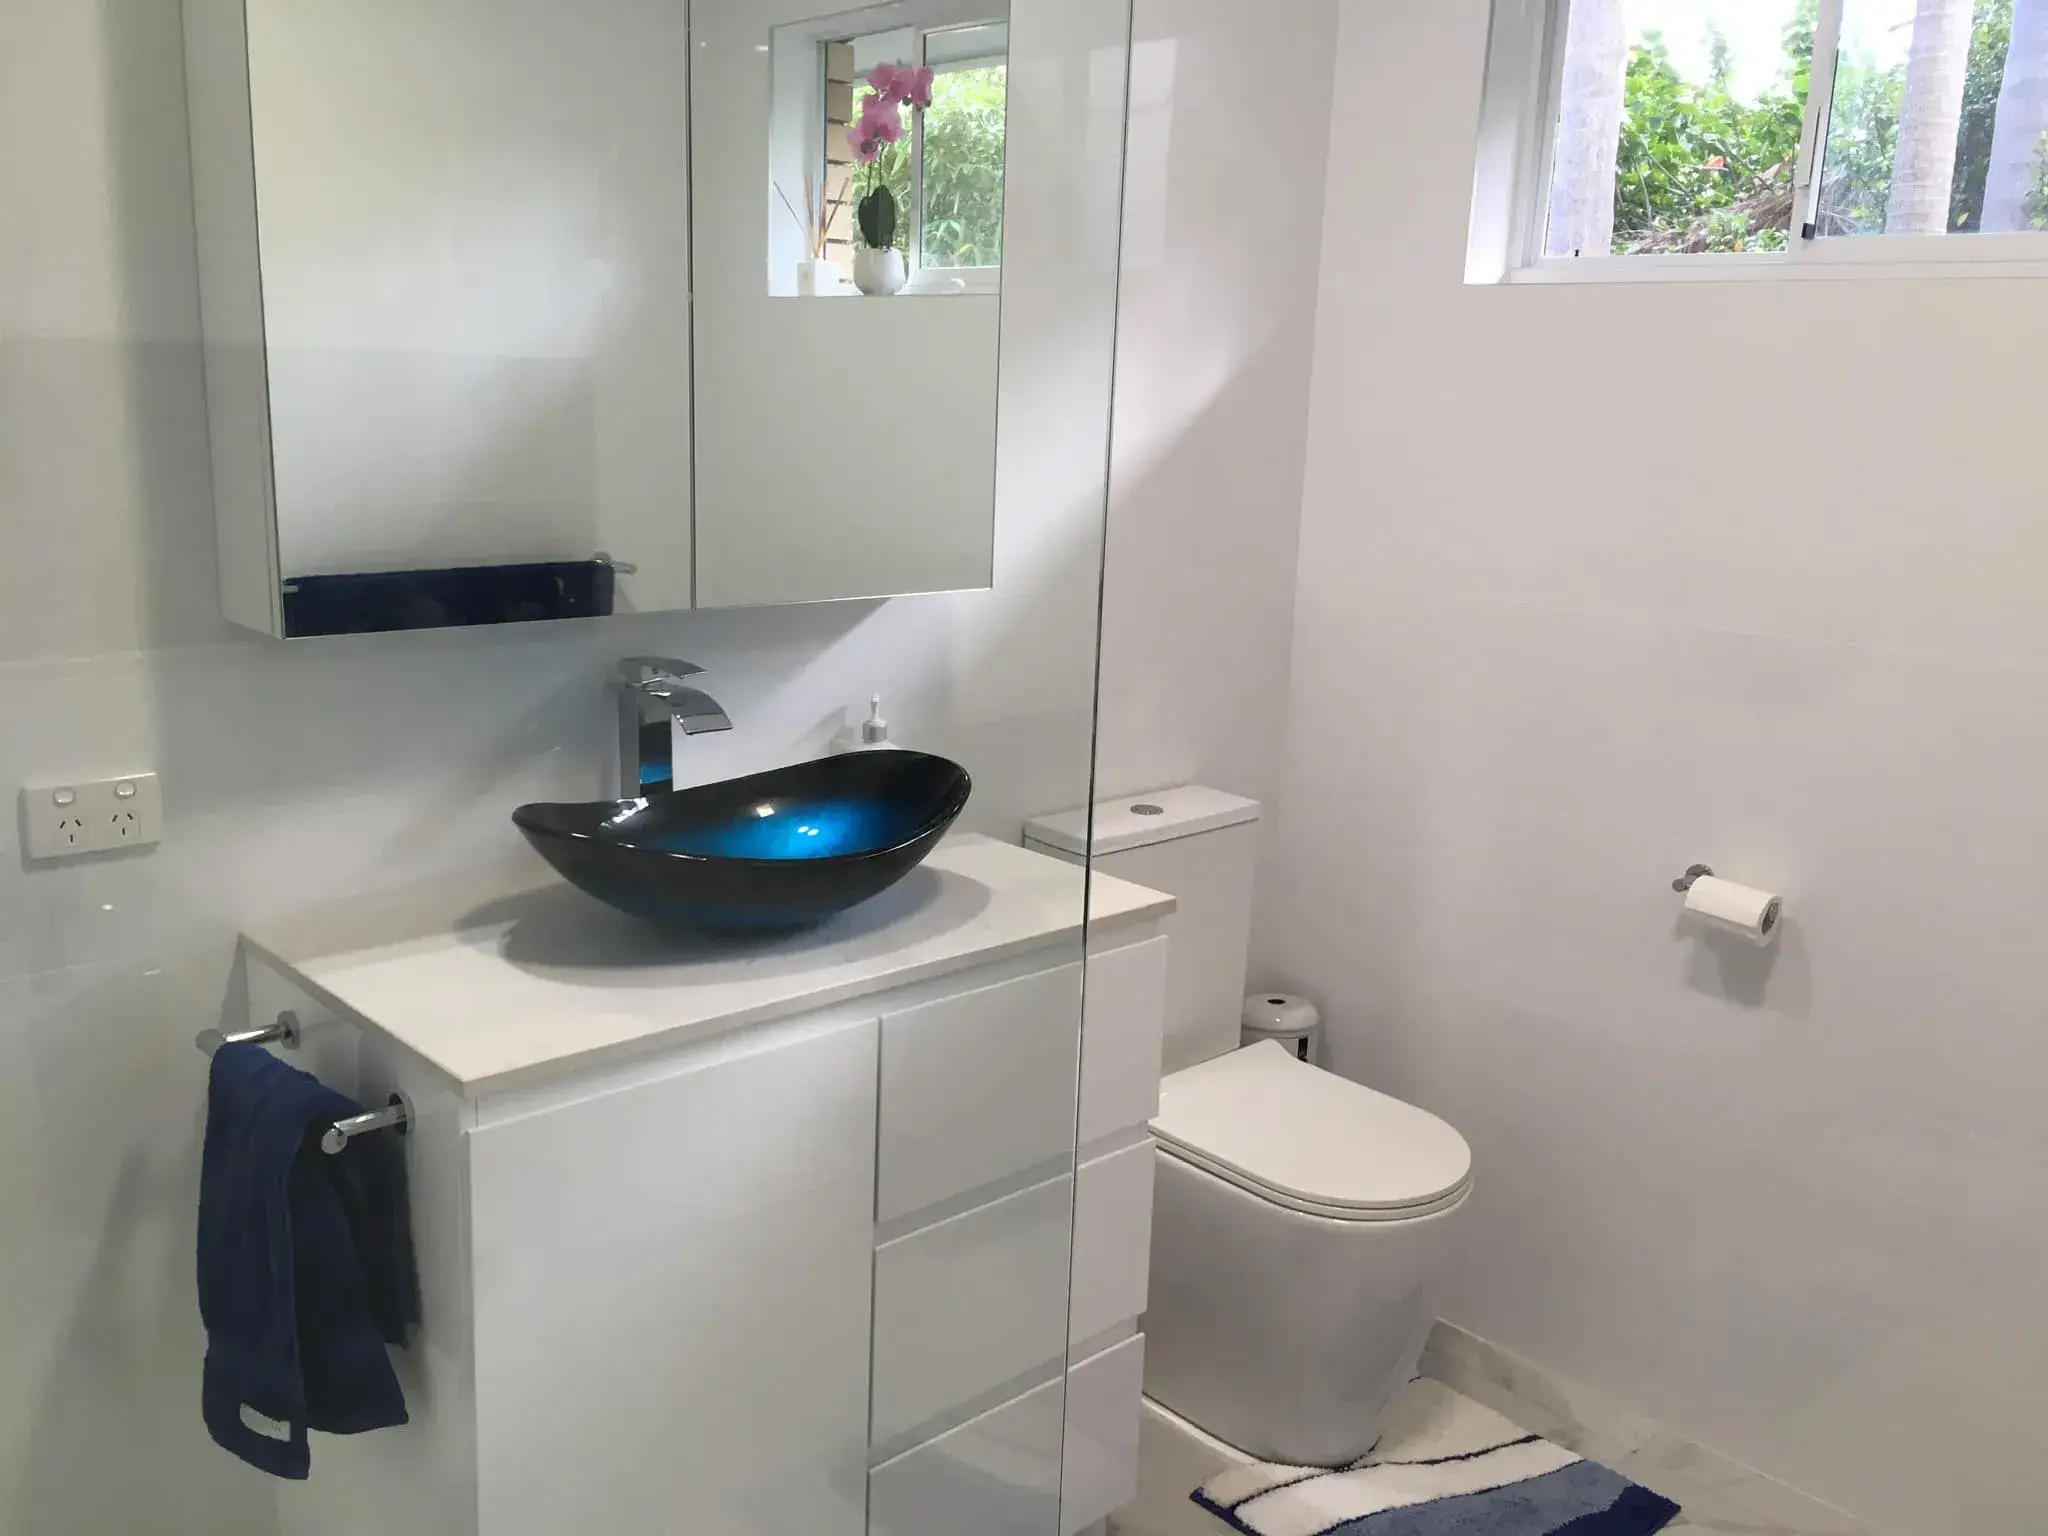 Bathroom Renovations Services Costs